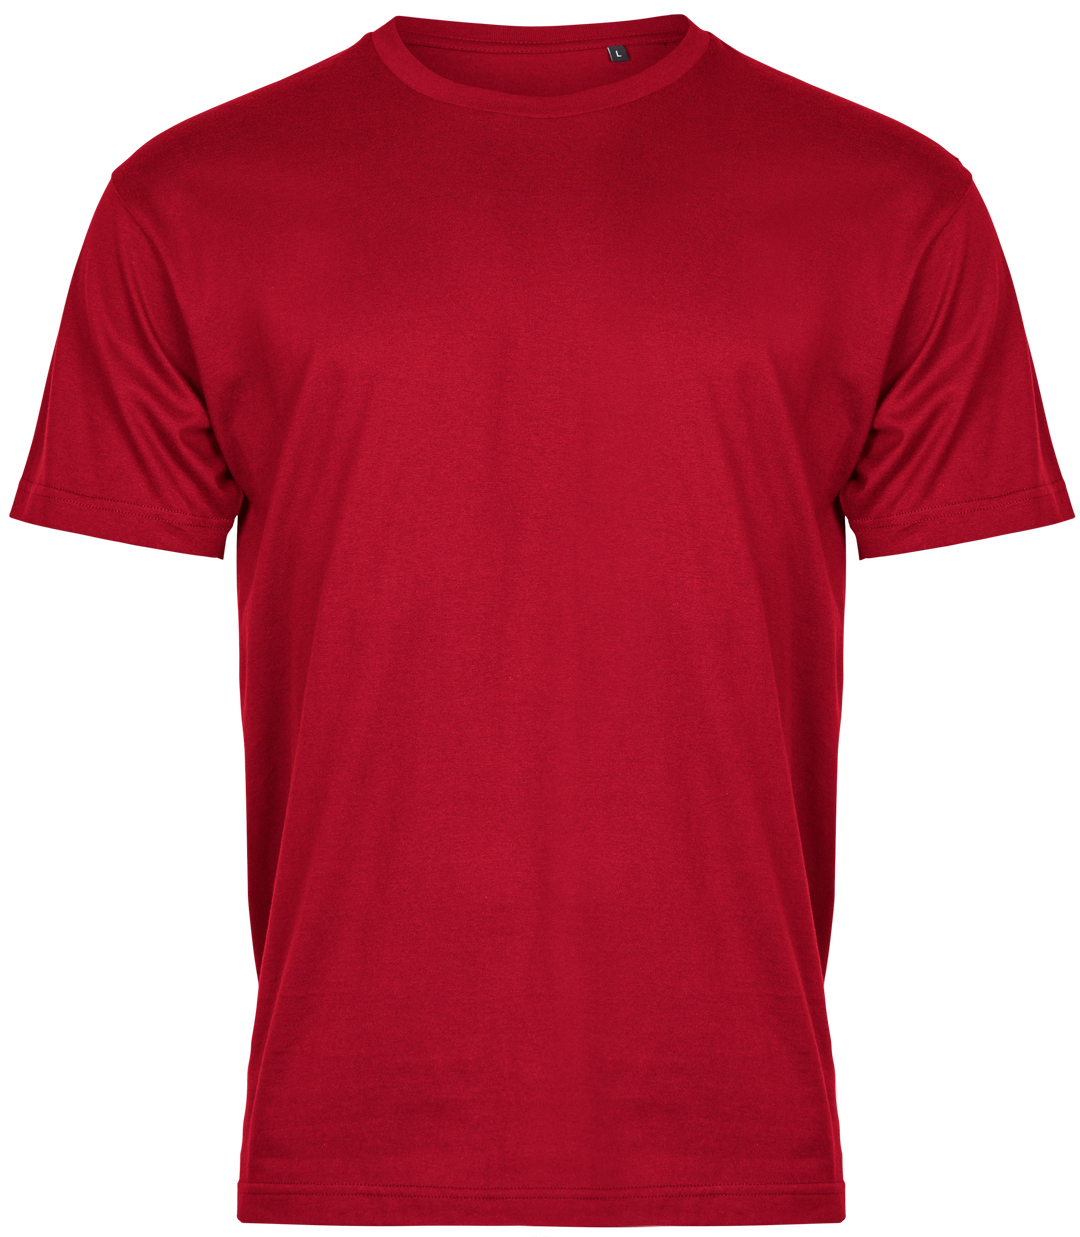 Basic Tee - Kampagne t-shirt med hvidt tryk på front eller ryg